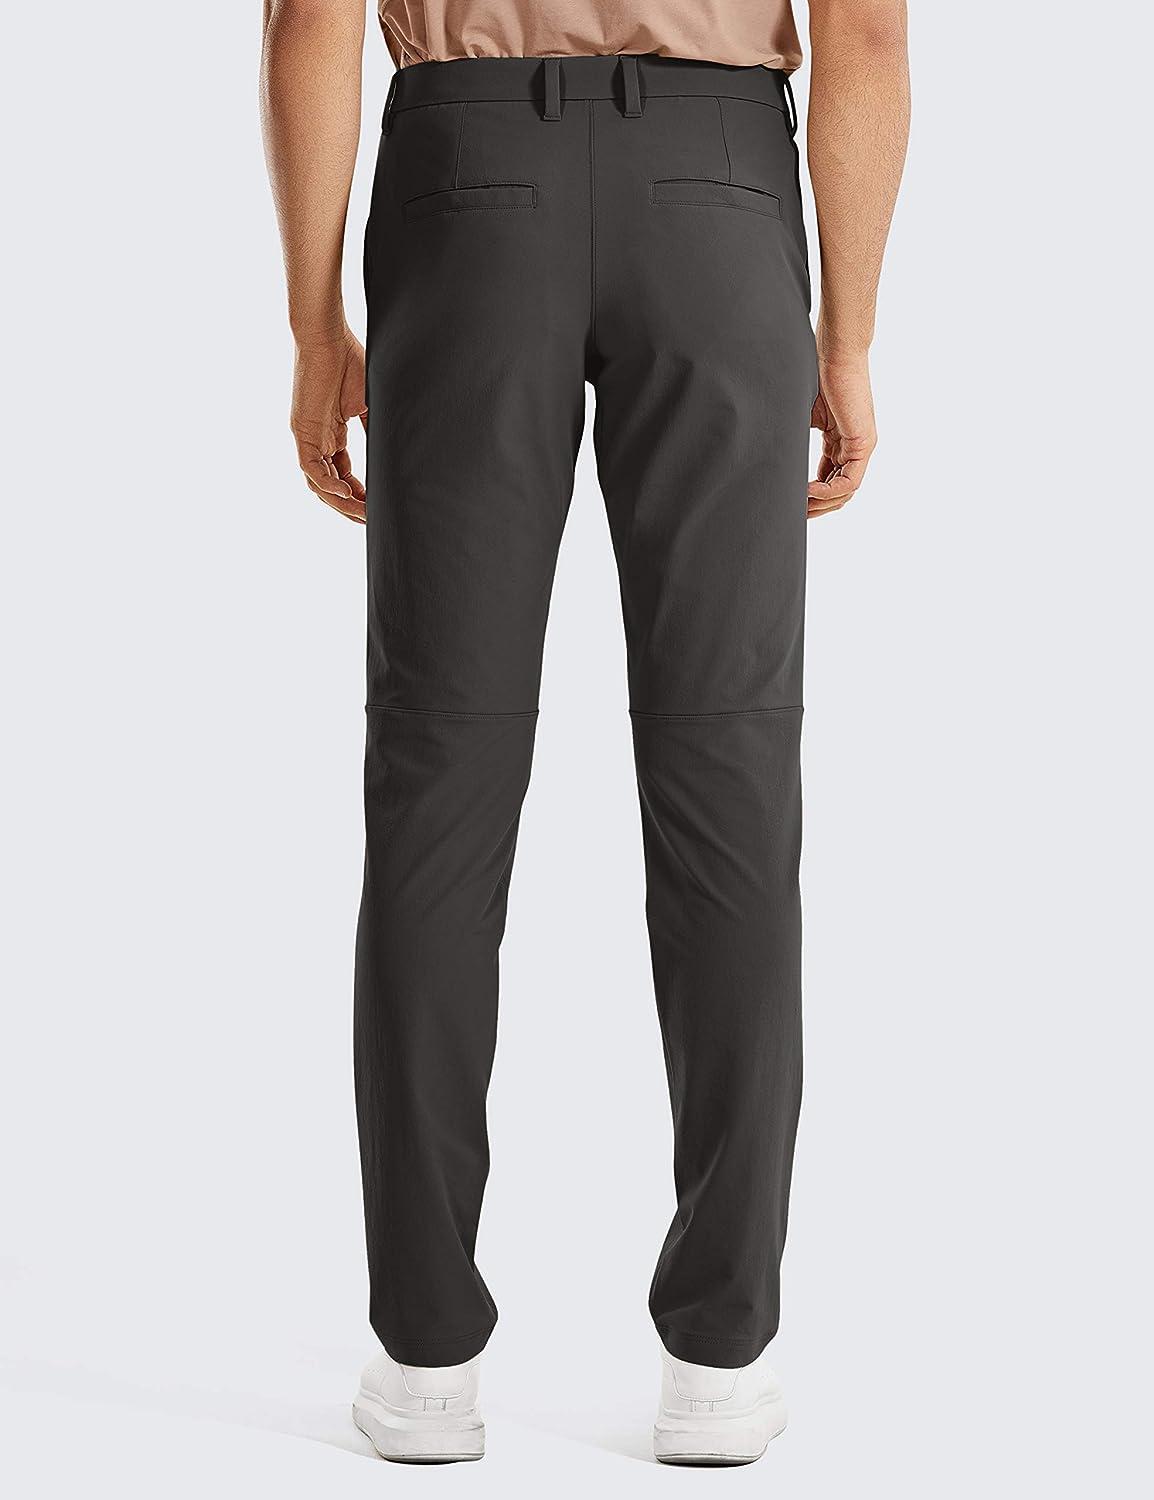 CRZ YOGA Men's Stretch Golf Pants - 31/33/35 Slim Fit Stretch